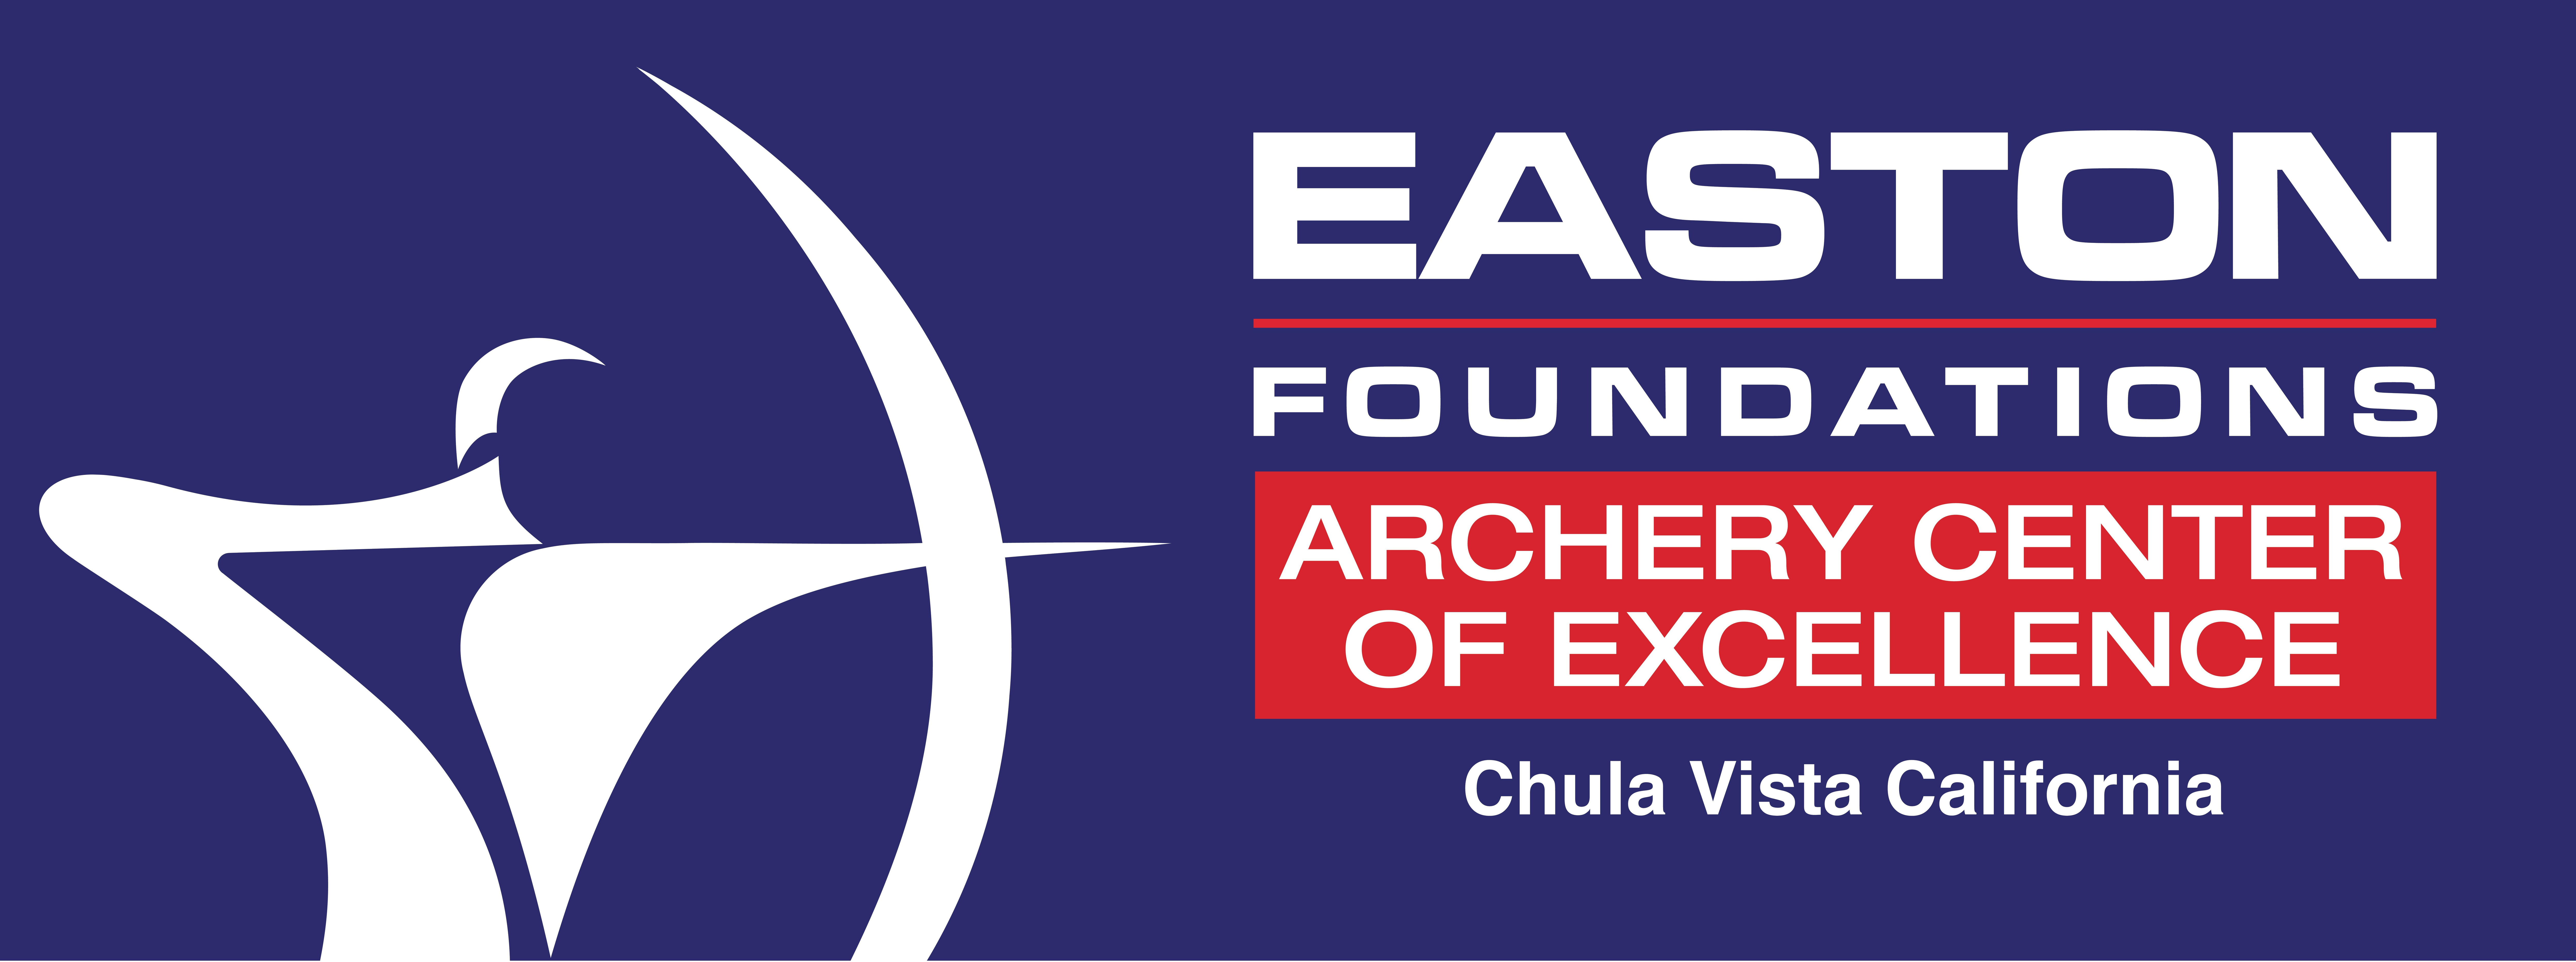 New Easton Logo - Sports Innovator Jim Easton Gifts New Easton Archery Center of ...